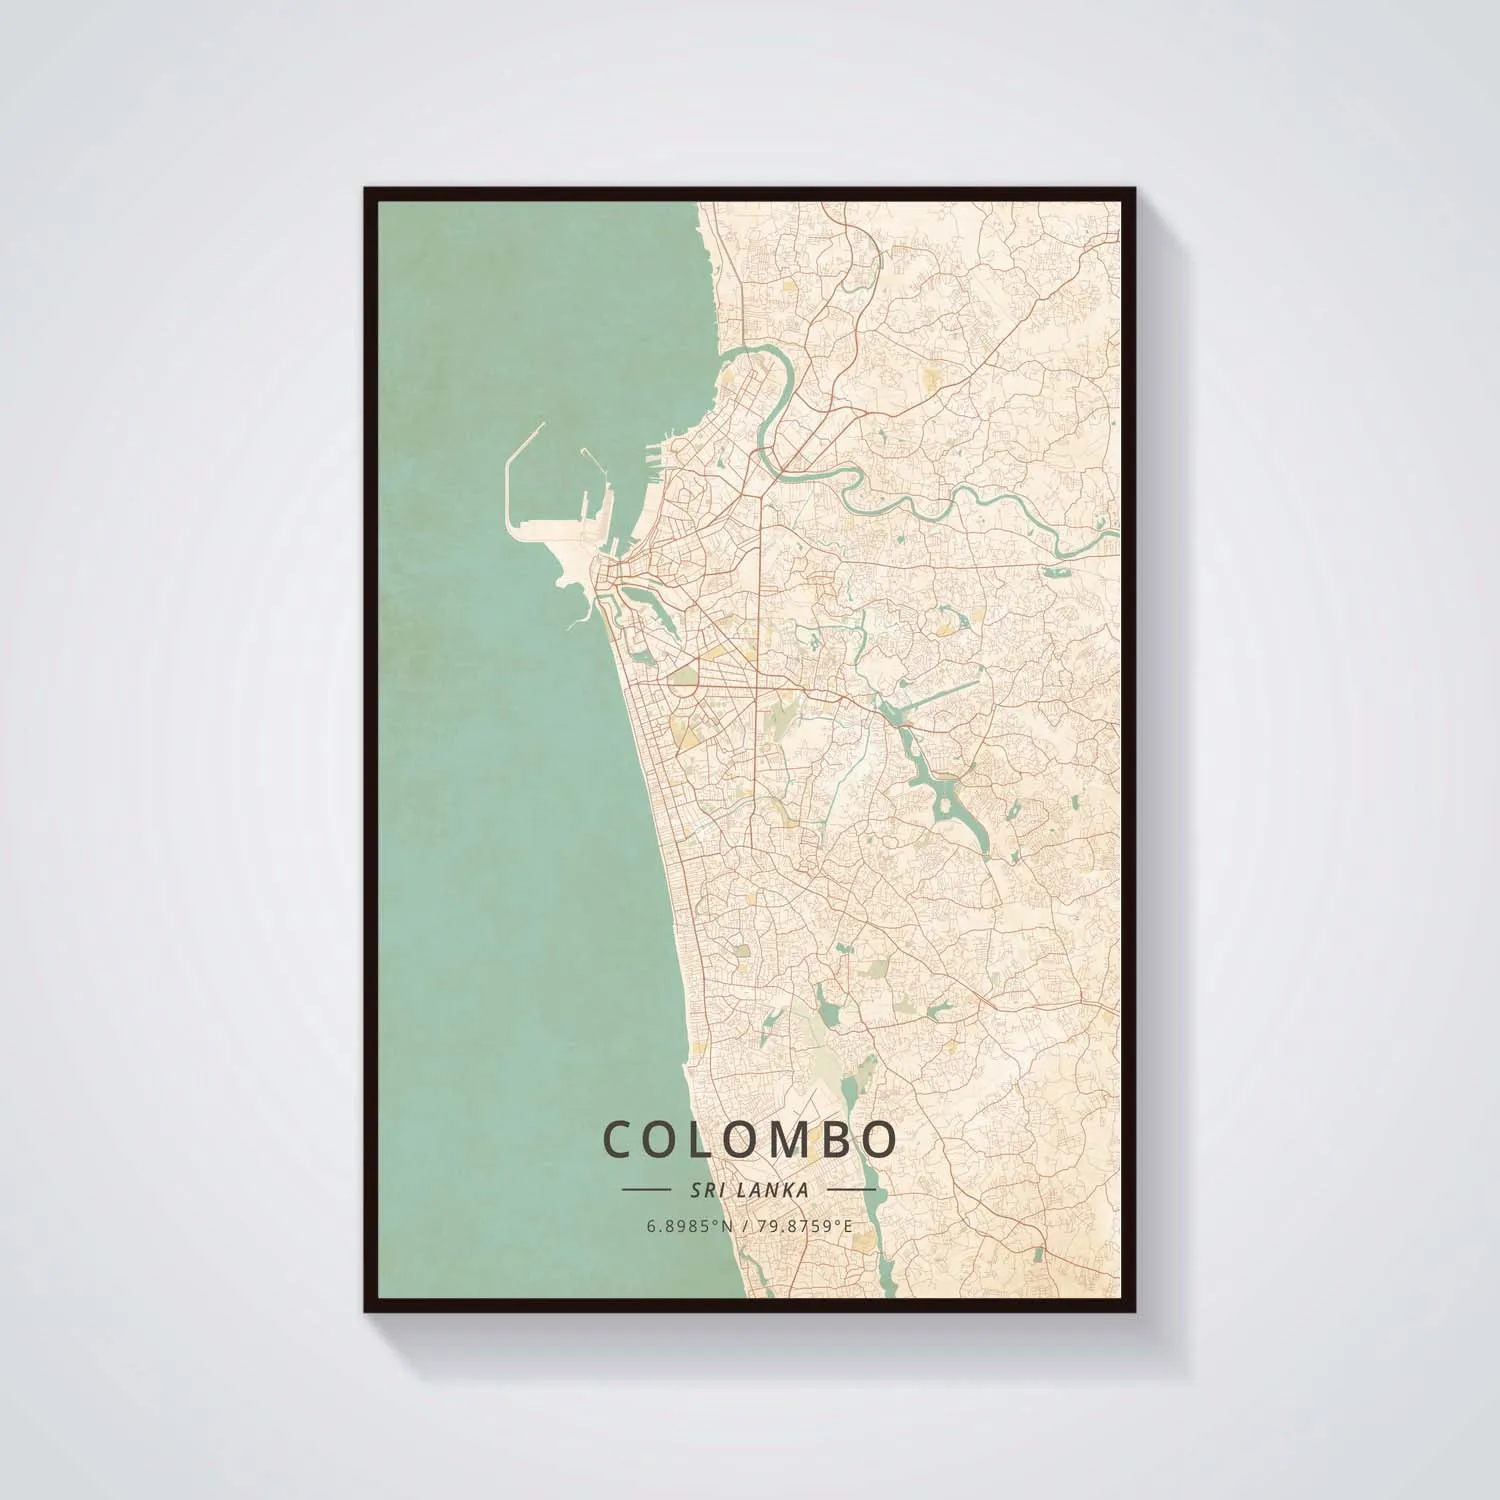 Colombo, Sri Lanka Plakat